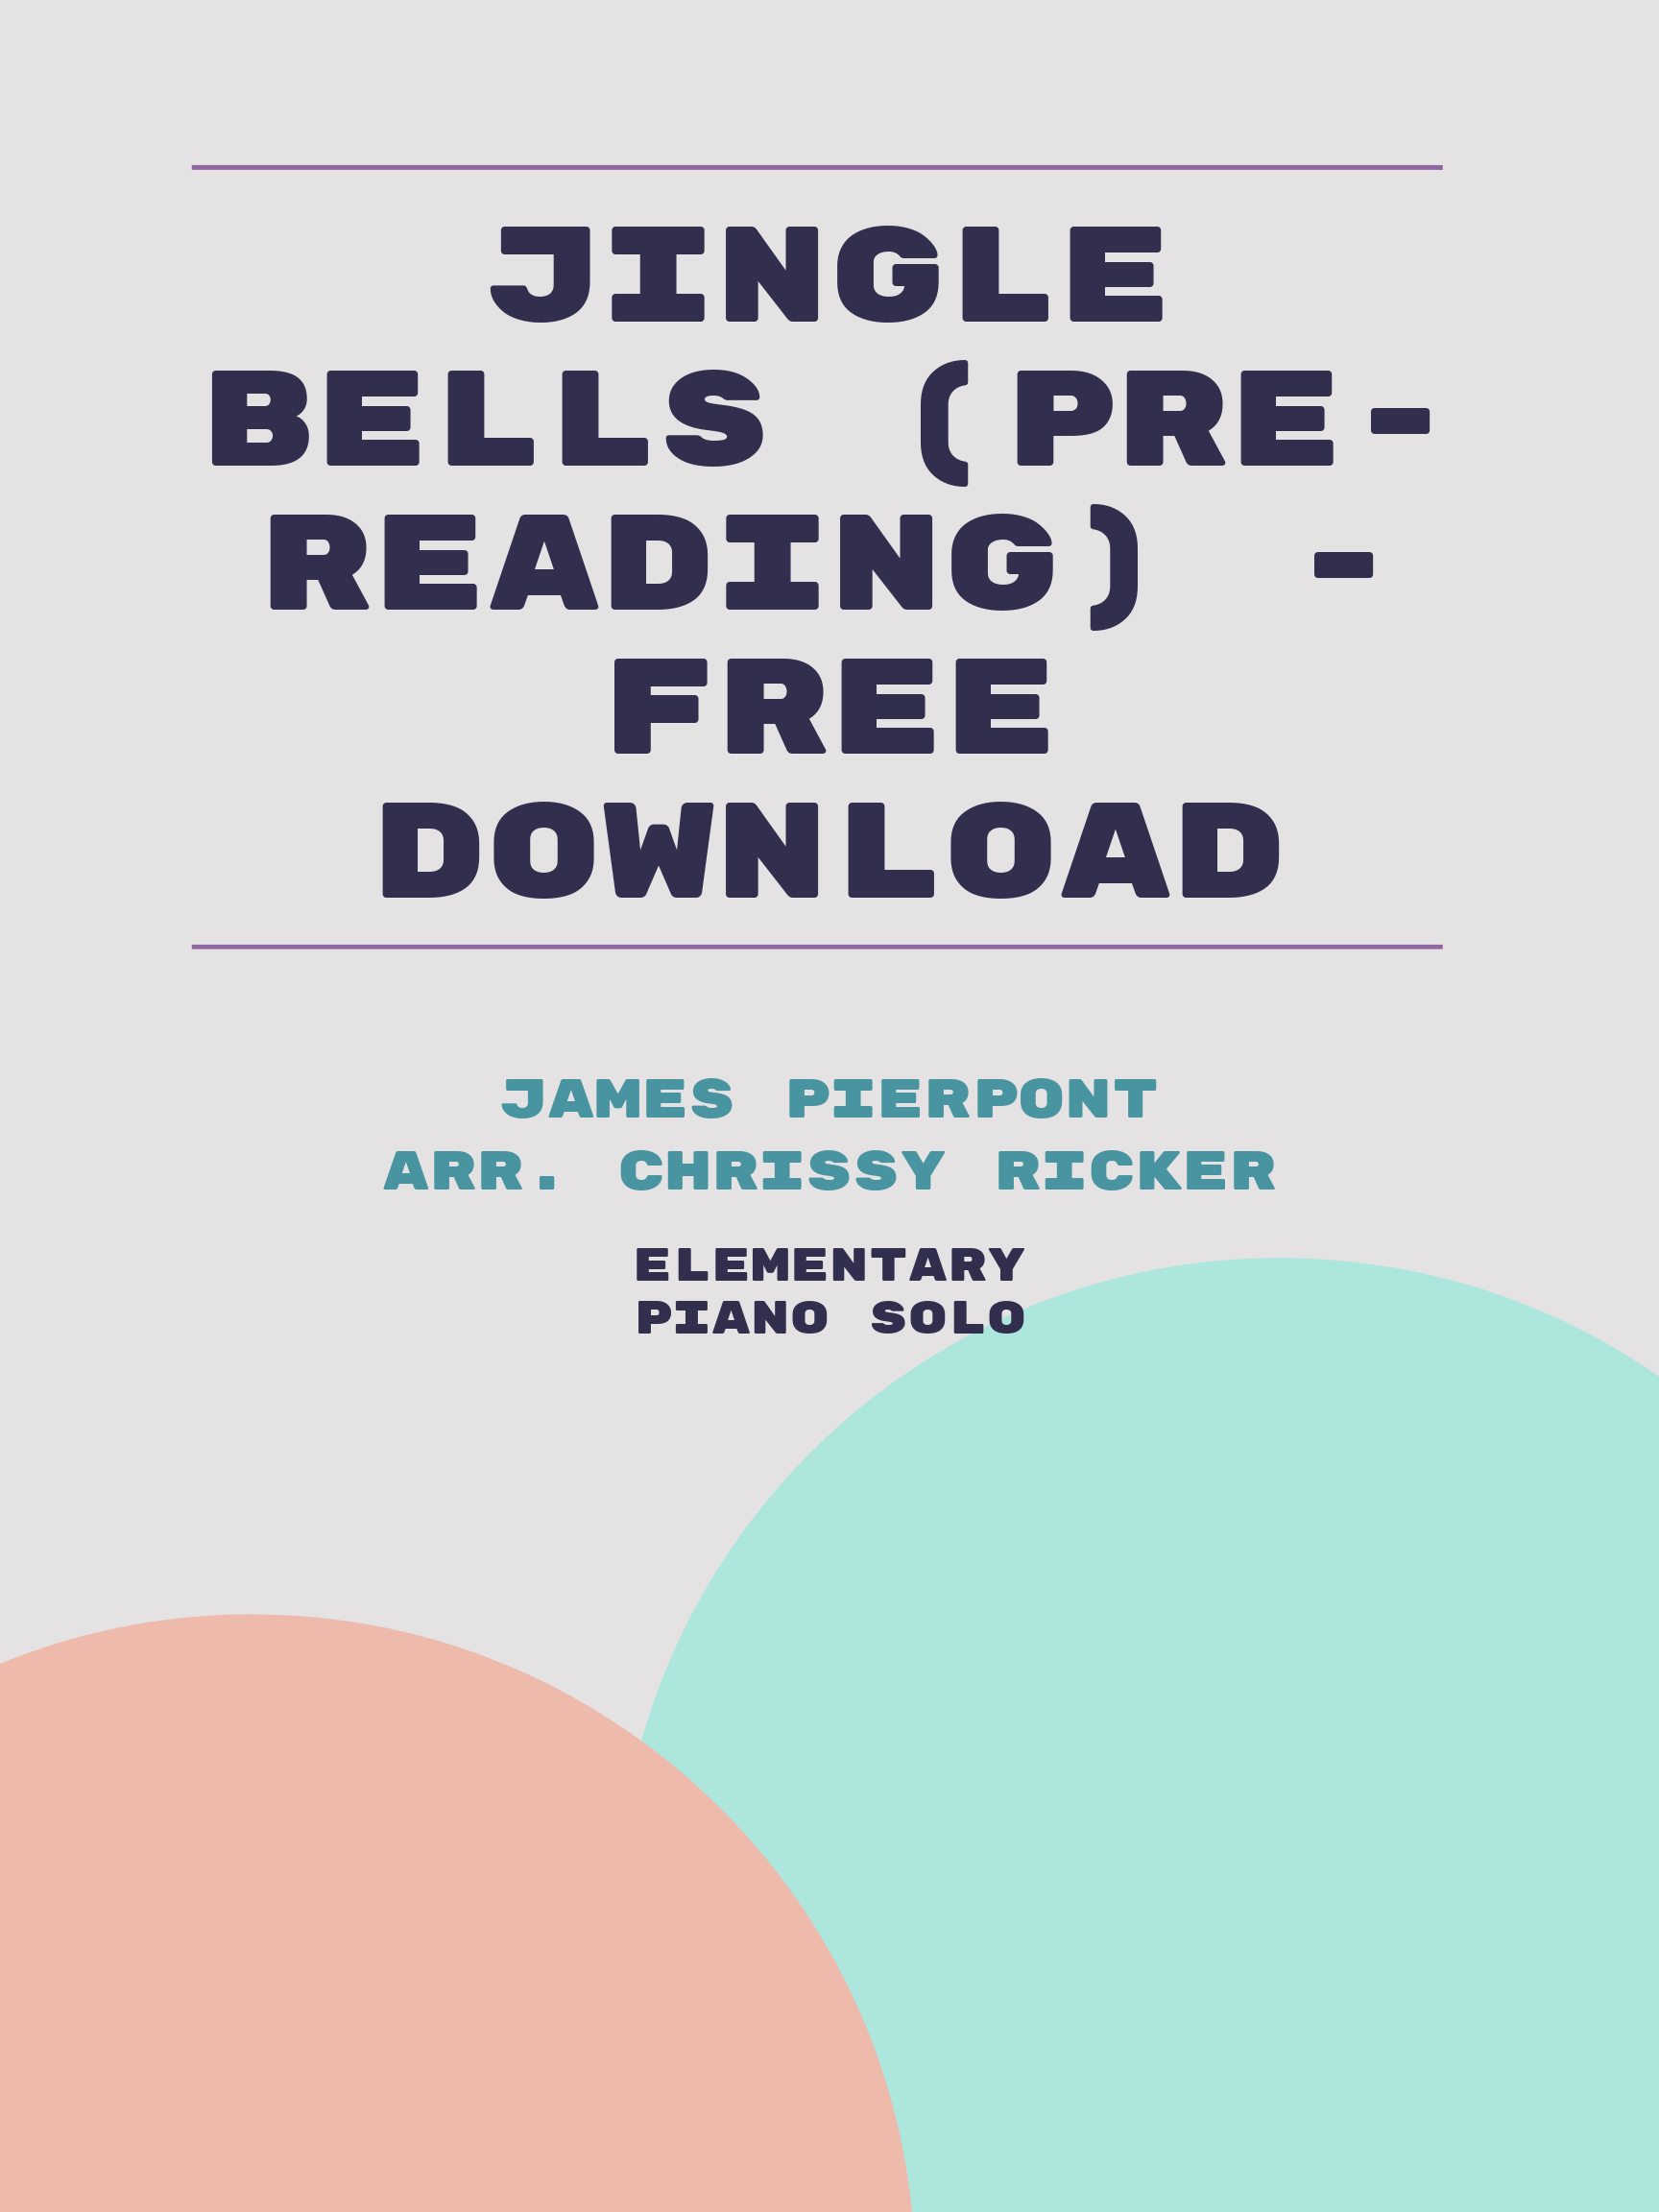 Jingle Bells (pre-reading) - free download by James Pierpont